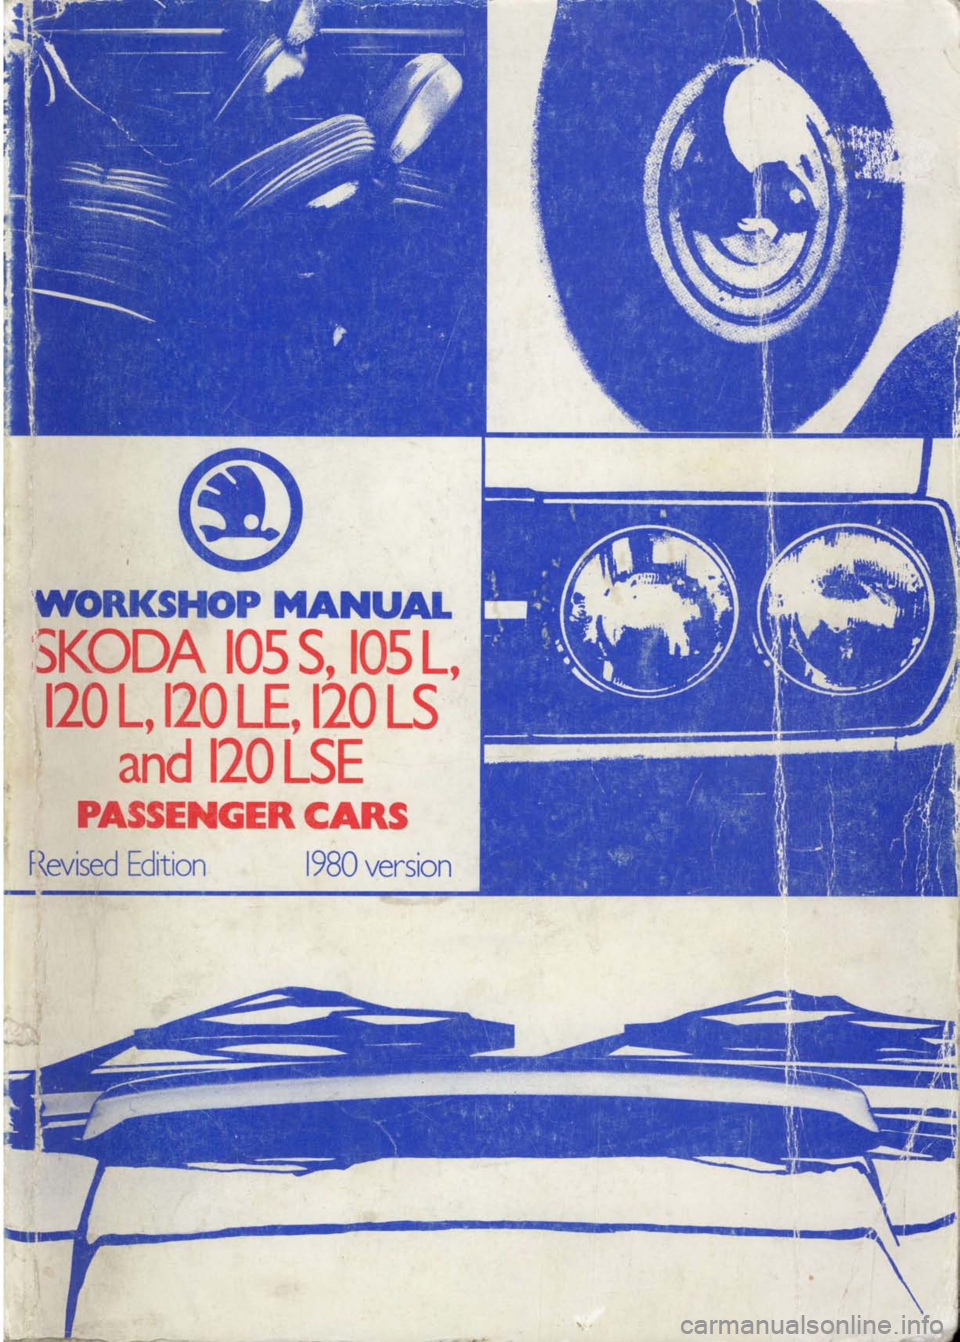 SKODA 120L 1980  Workshop Manual , 
WORKSHOP 
}IANUAL
;sl(oDA  t05s, t05  1,
120 L,  120 
LE, 120  LS
and  120 
LsE
PASSENGERCARS
F{evised  Edition  l9B0  version
- 